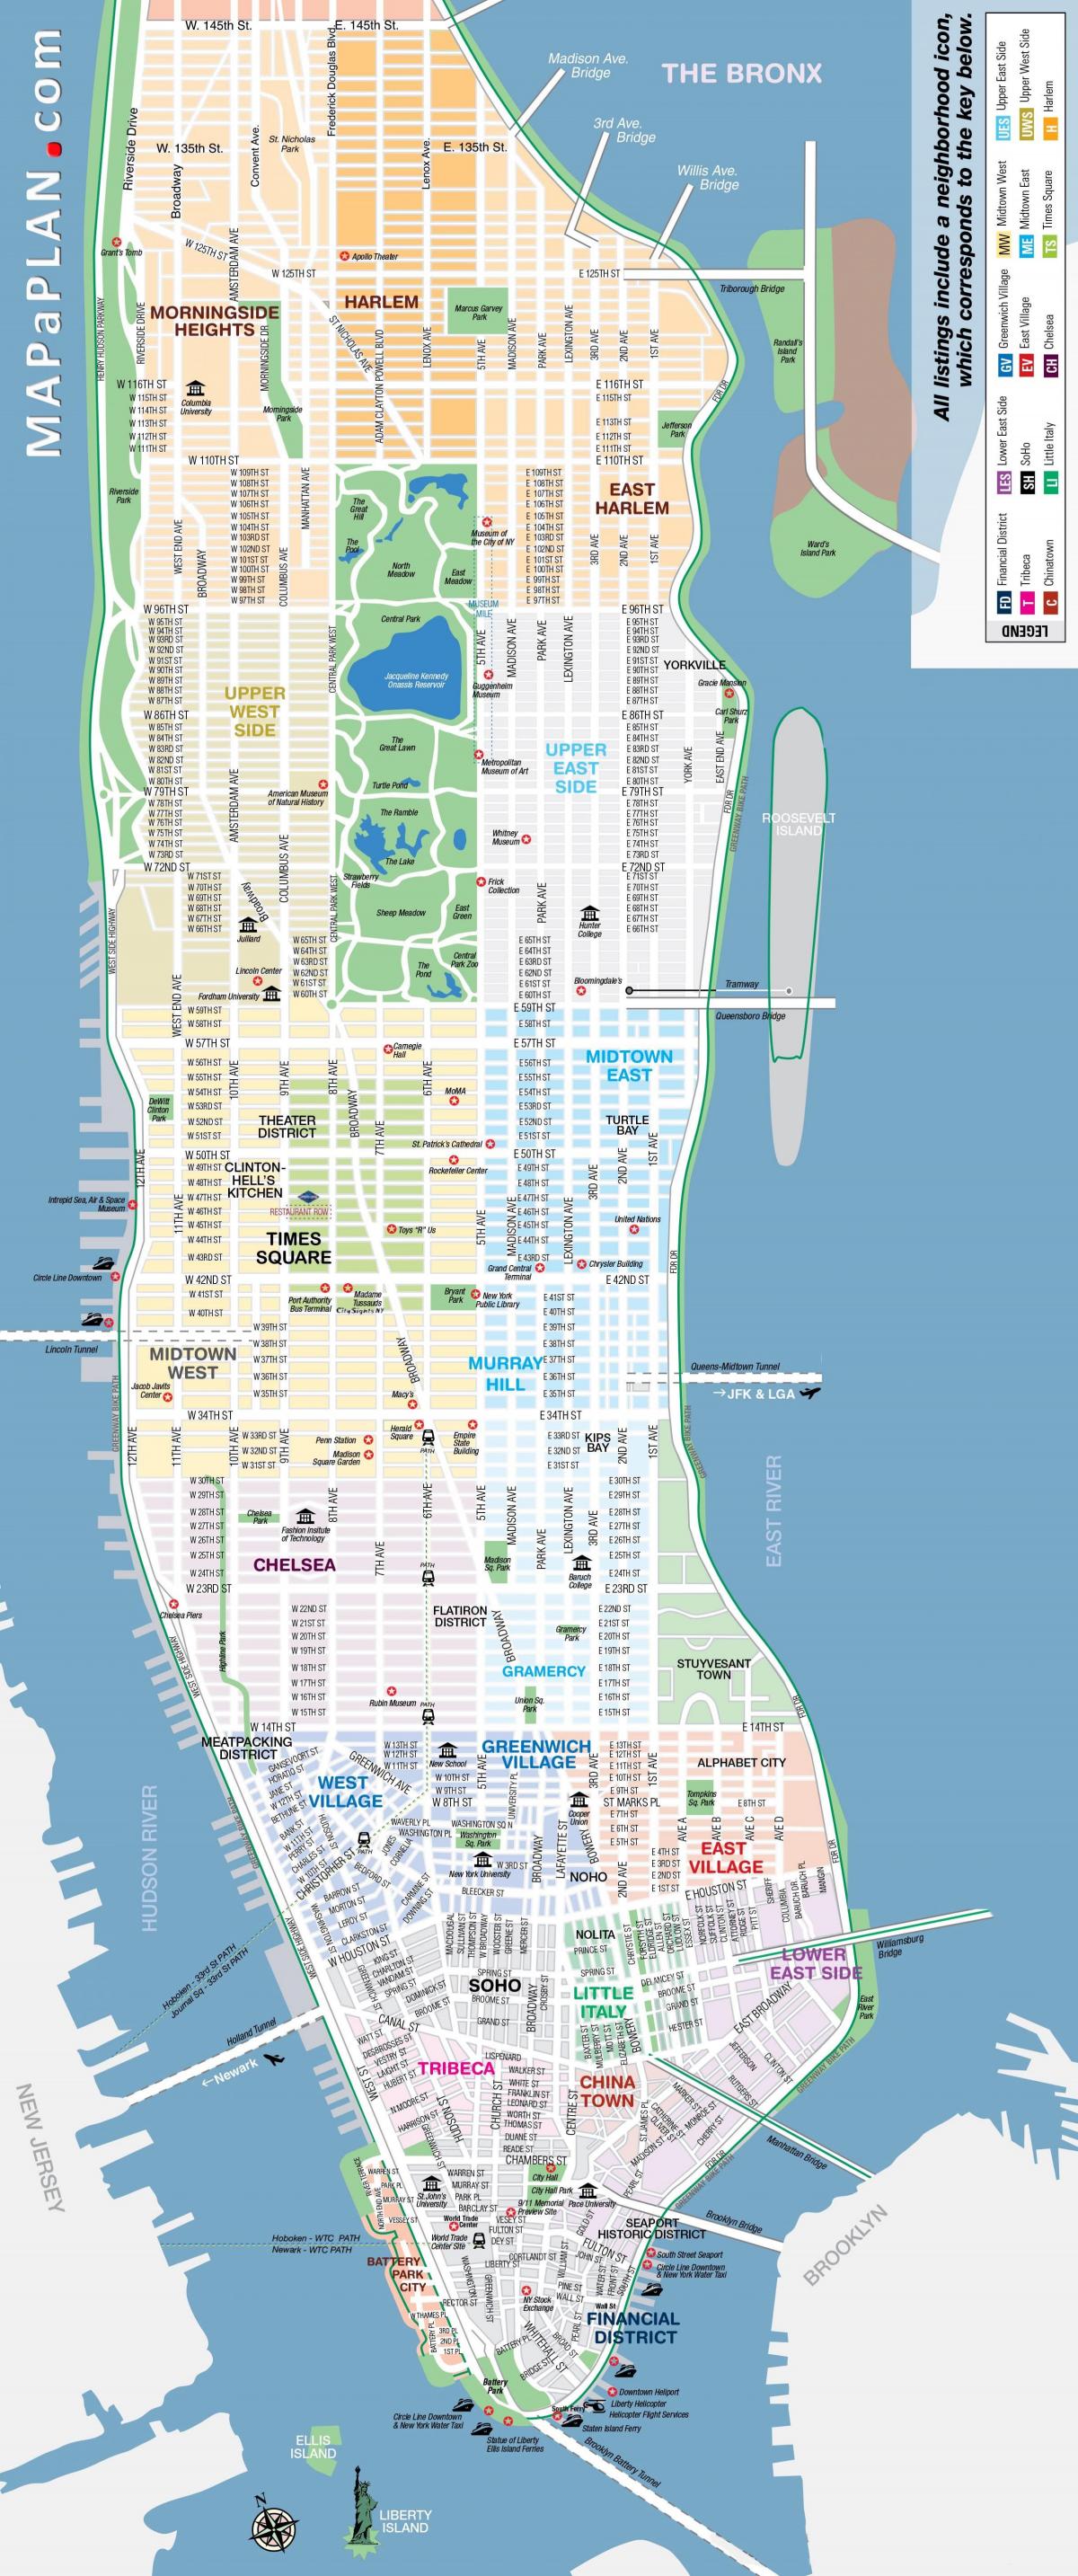 Mappa dei luoghi di interesse di Manhattan